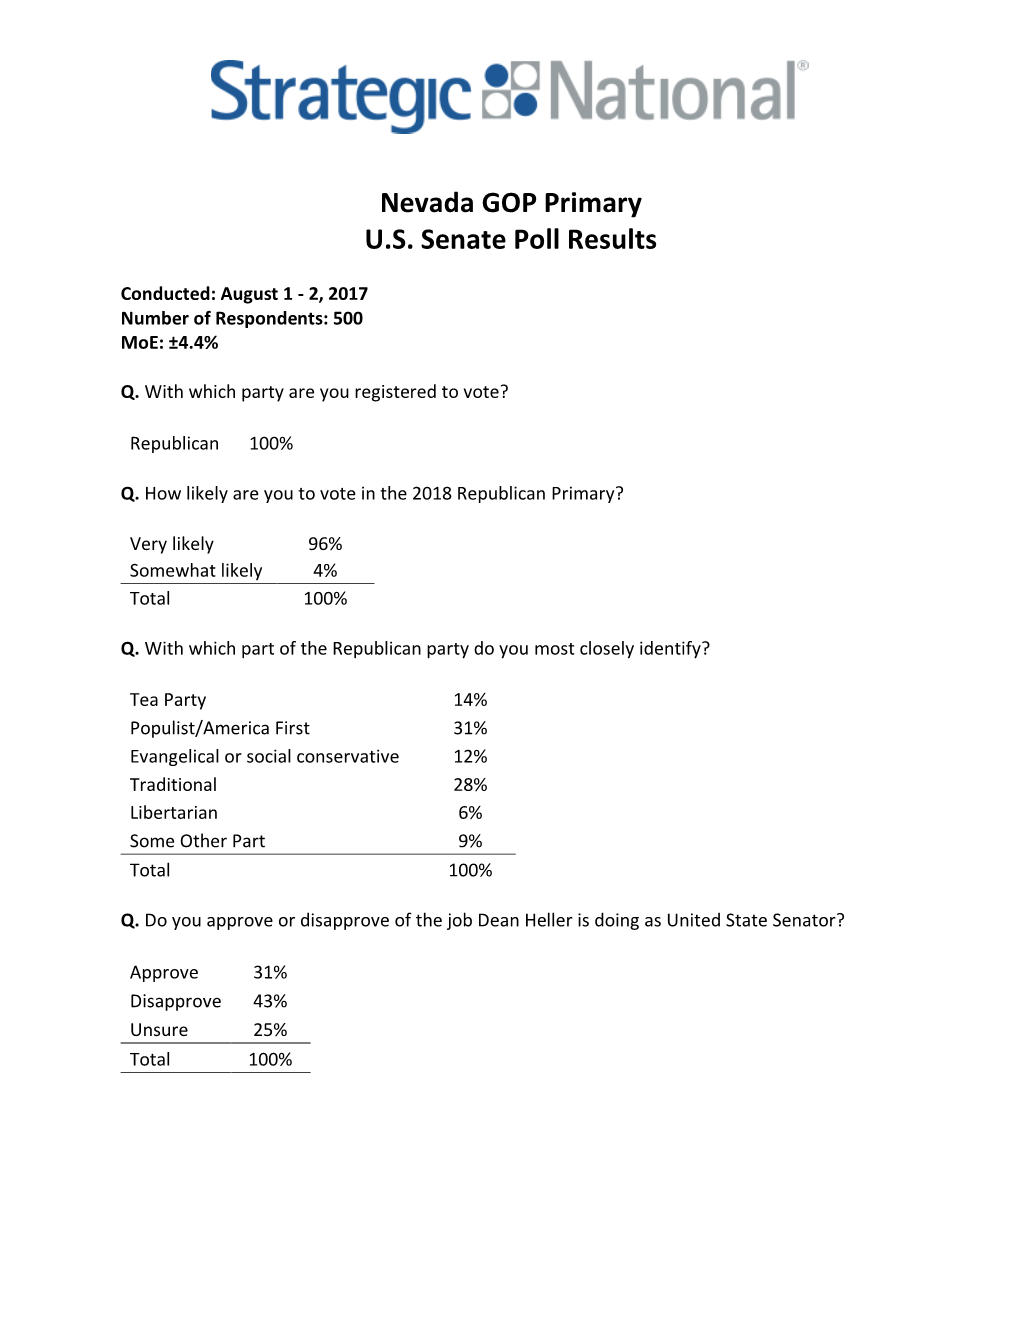 Nevada GOP Primary US Senate Poll Results